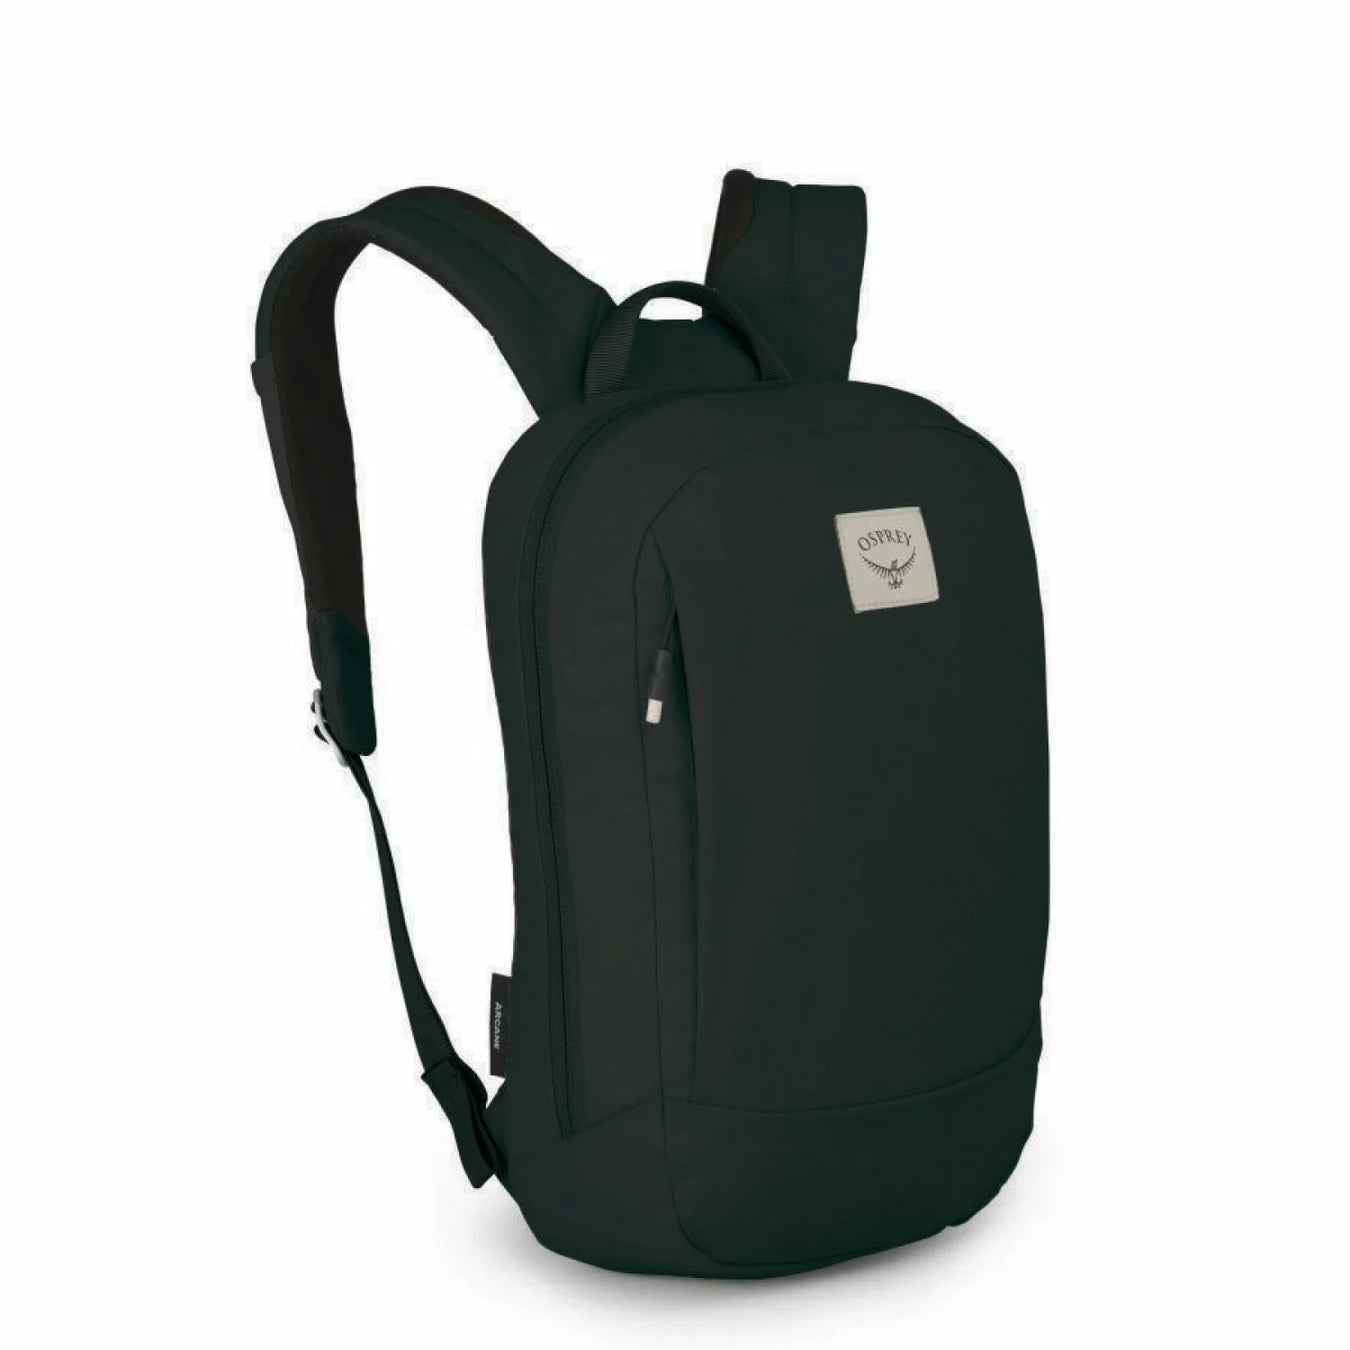 Osprey's Laptop Backpacks